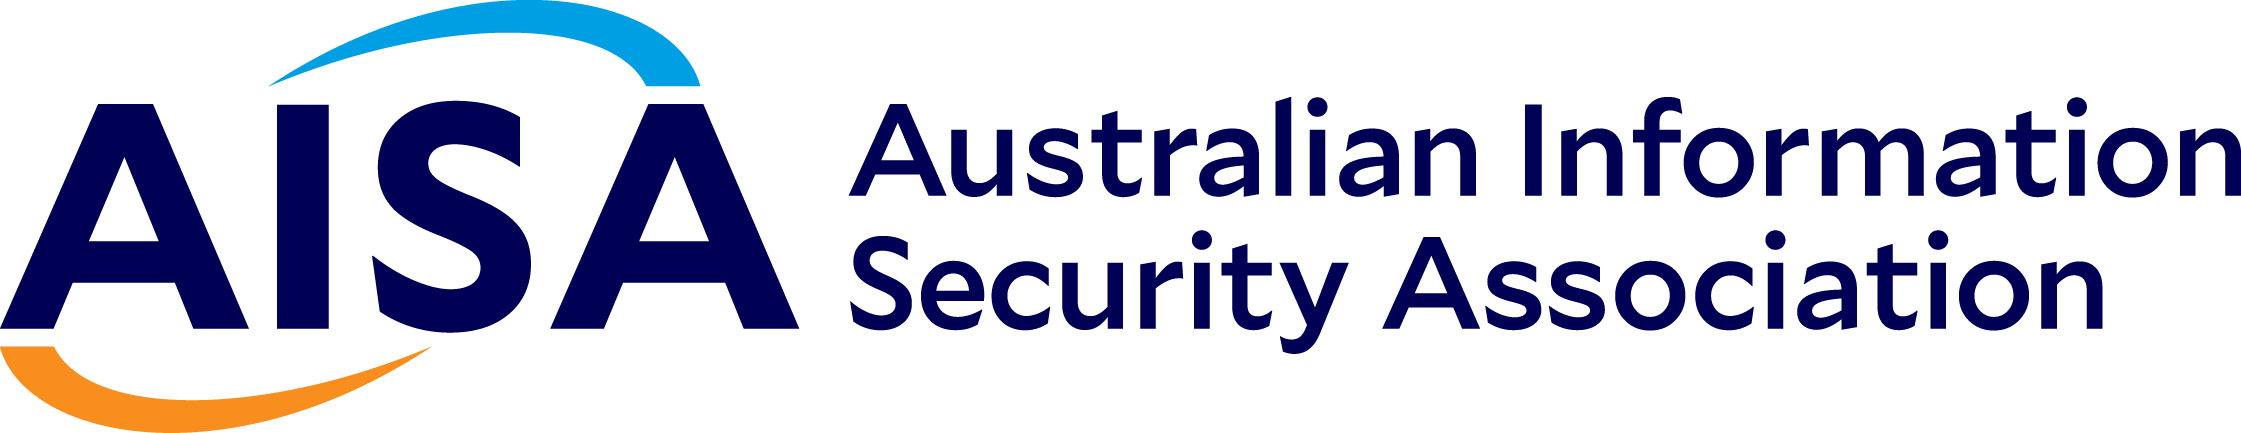 Logo AISA Australian Information Security Association